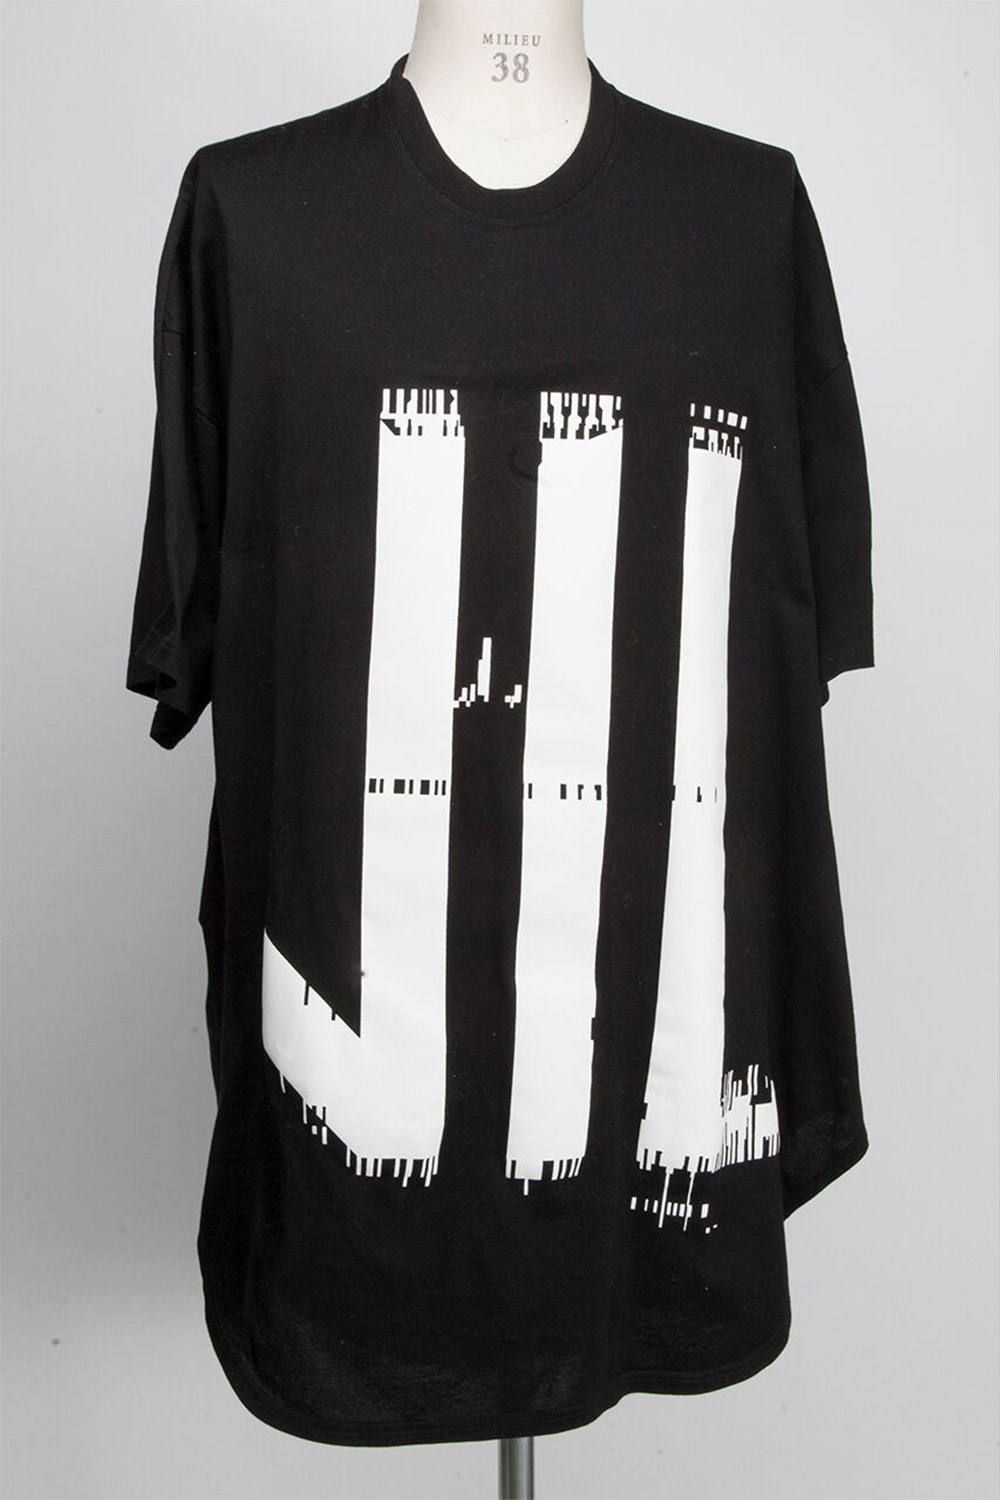 NILoS - 家紋Tシャツ - KAMON ROUND T-SHIRT - BLACK×WHITE | ADDICT 